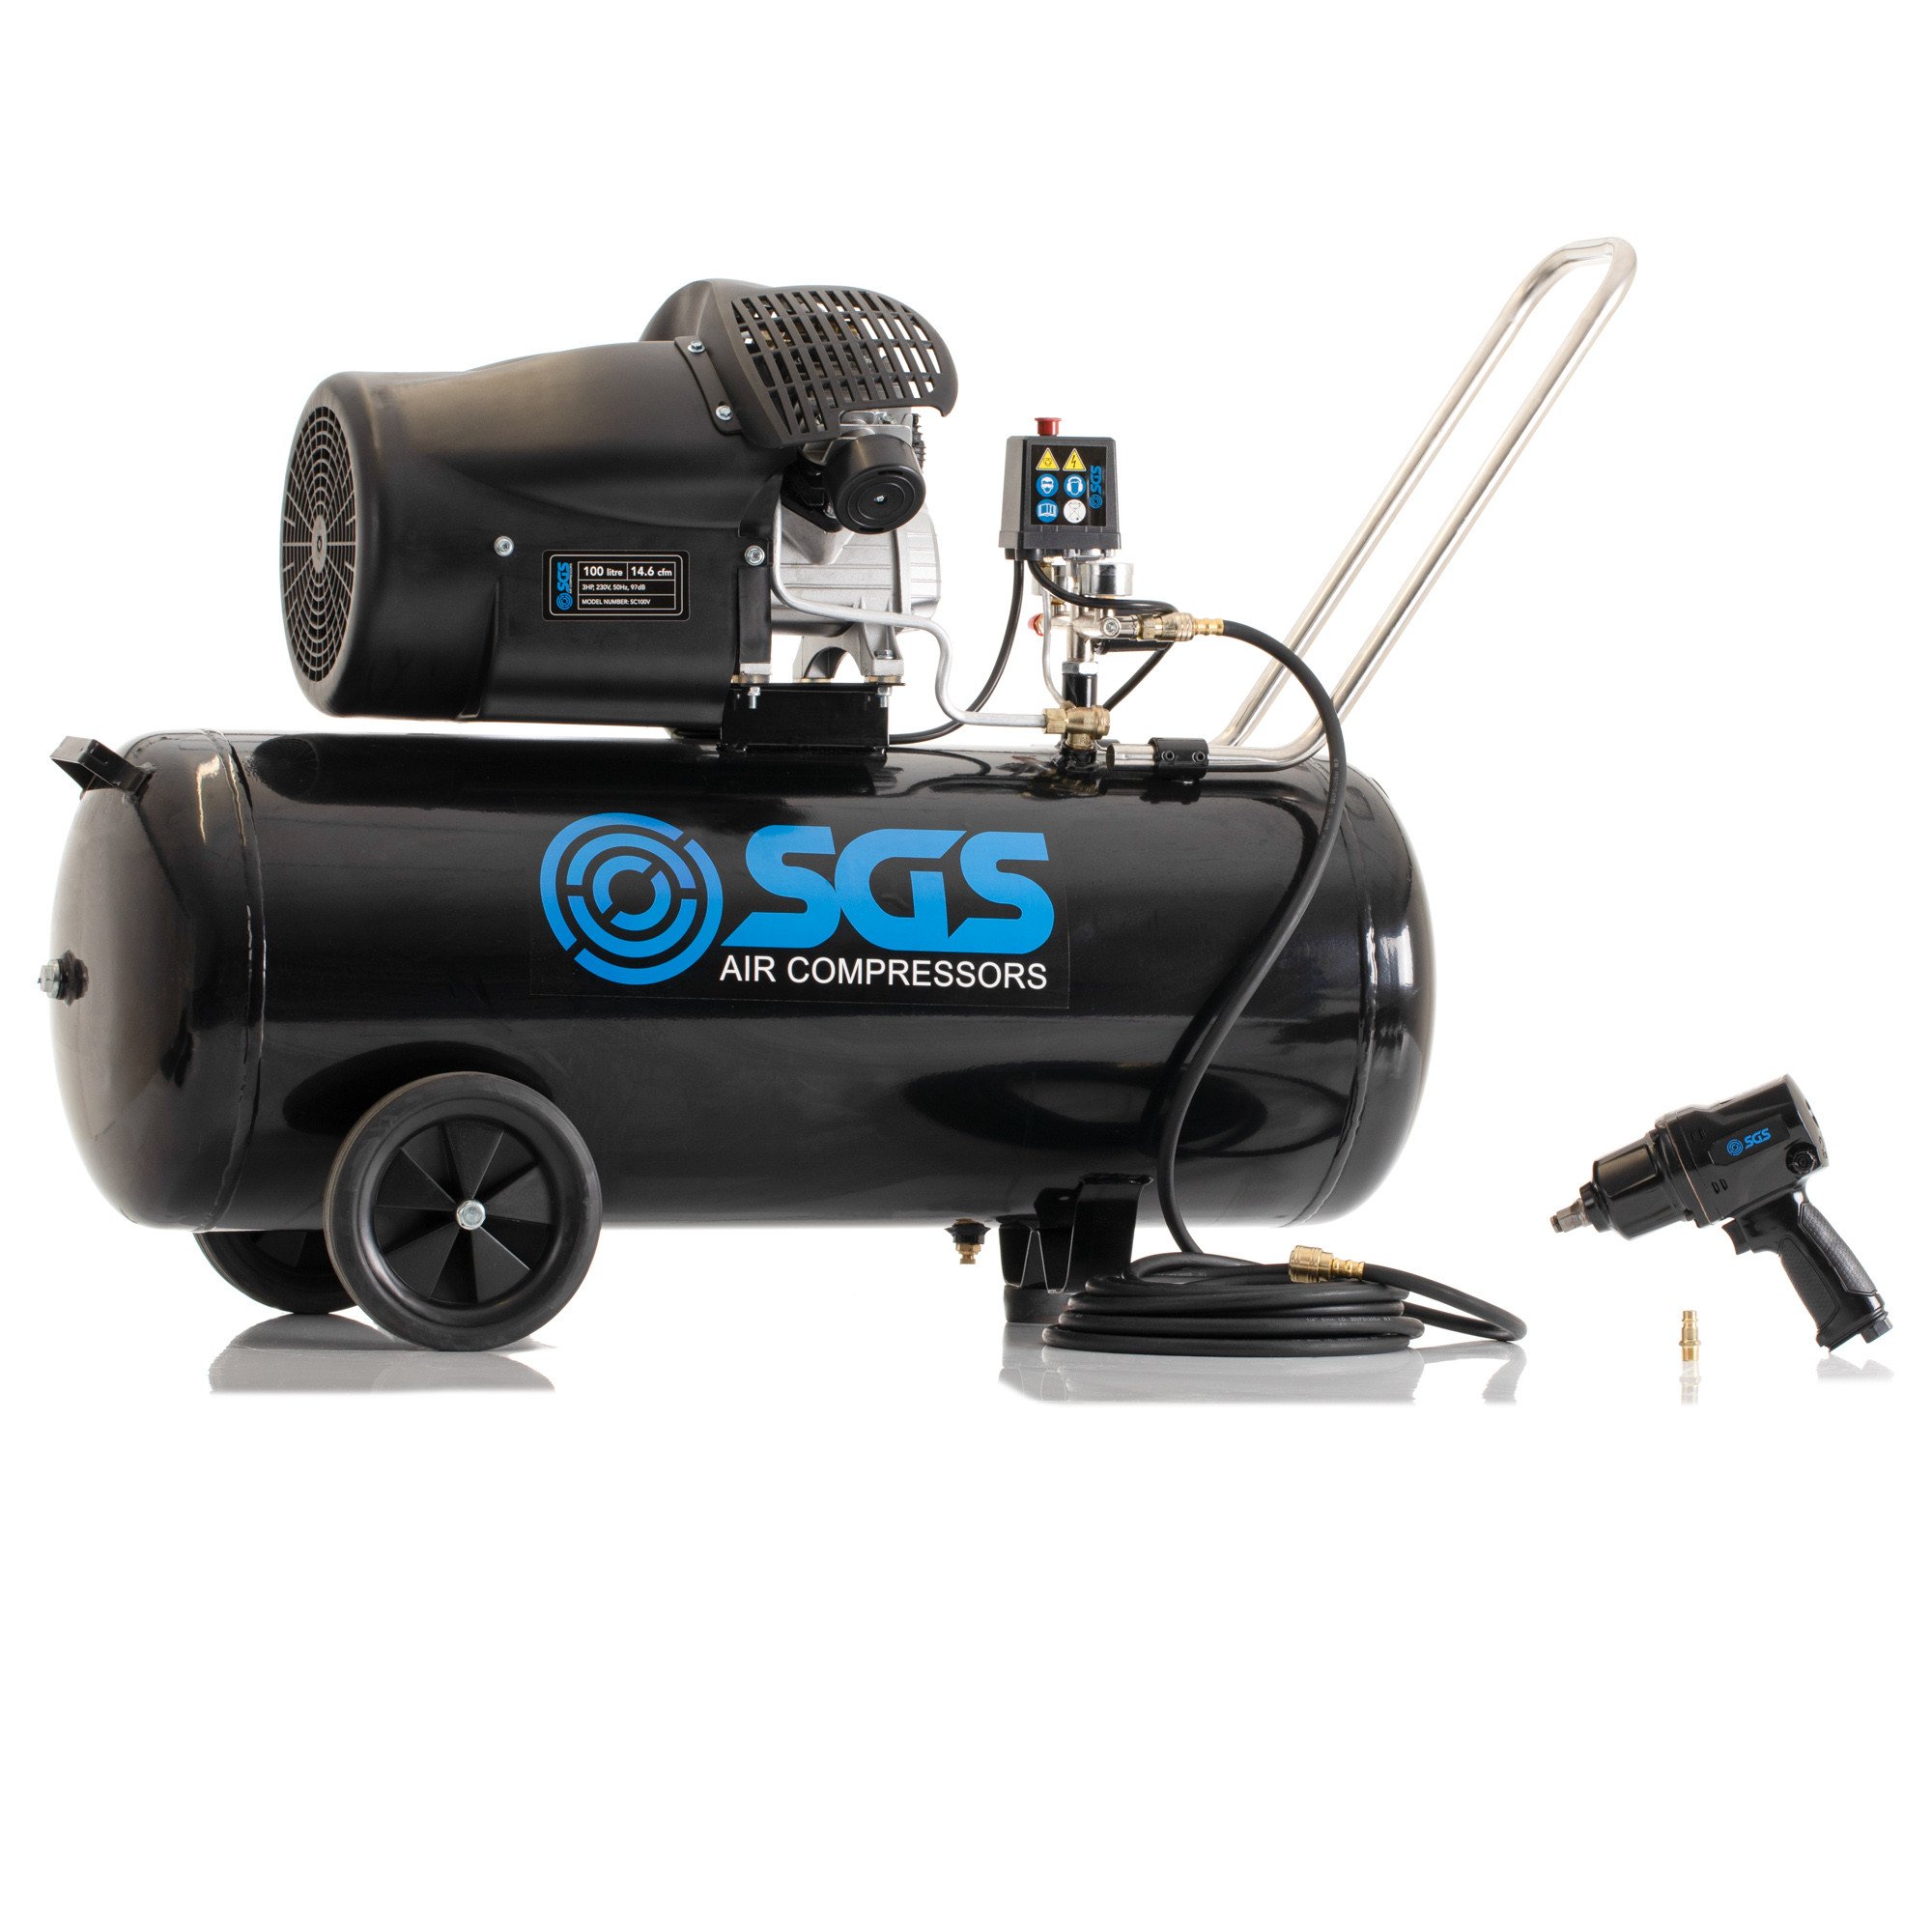 SGS 100升直接驱动空气压缩机& 880海里空气冲击扳手套件3.0 - 14.6 cfm惠普100 l